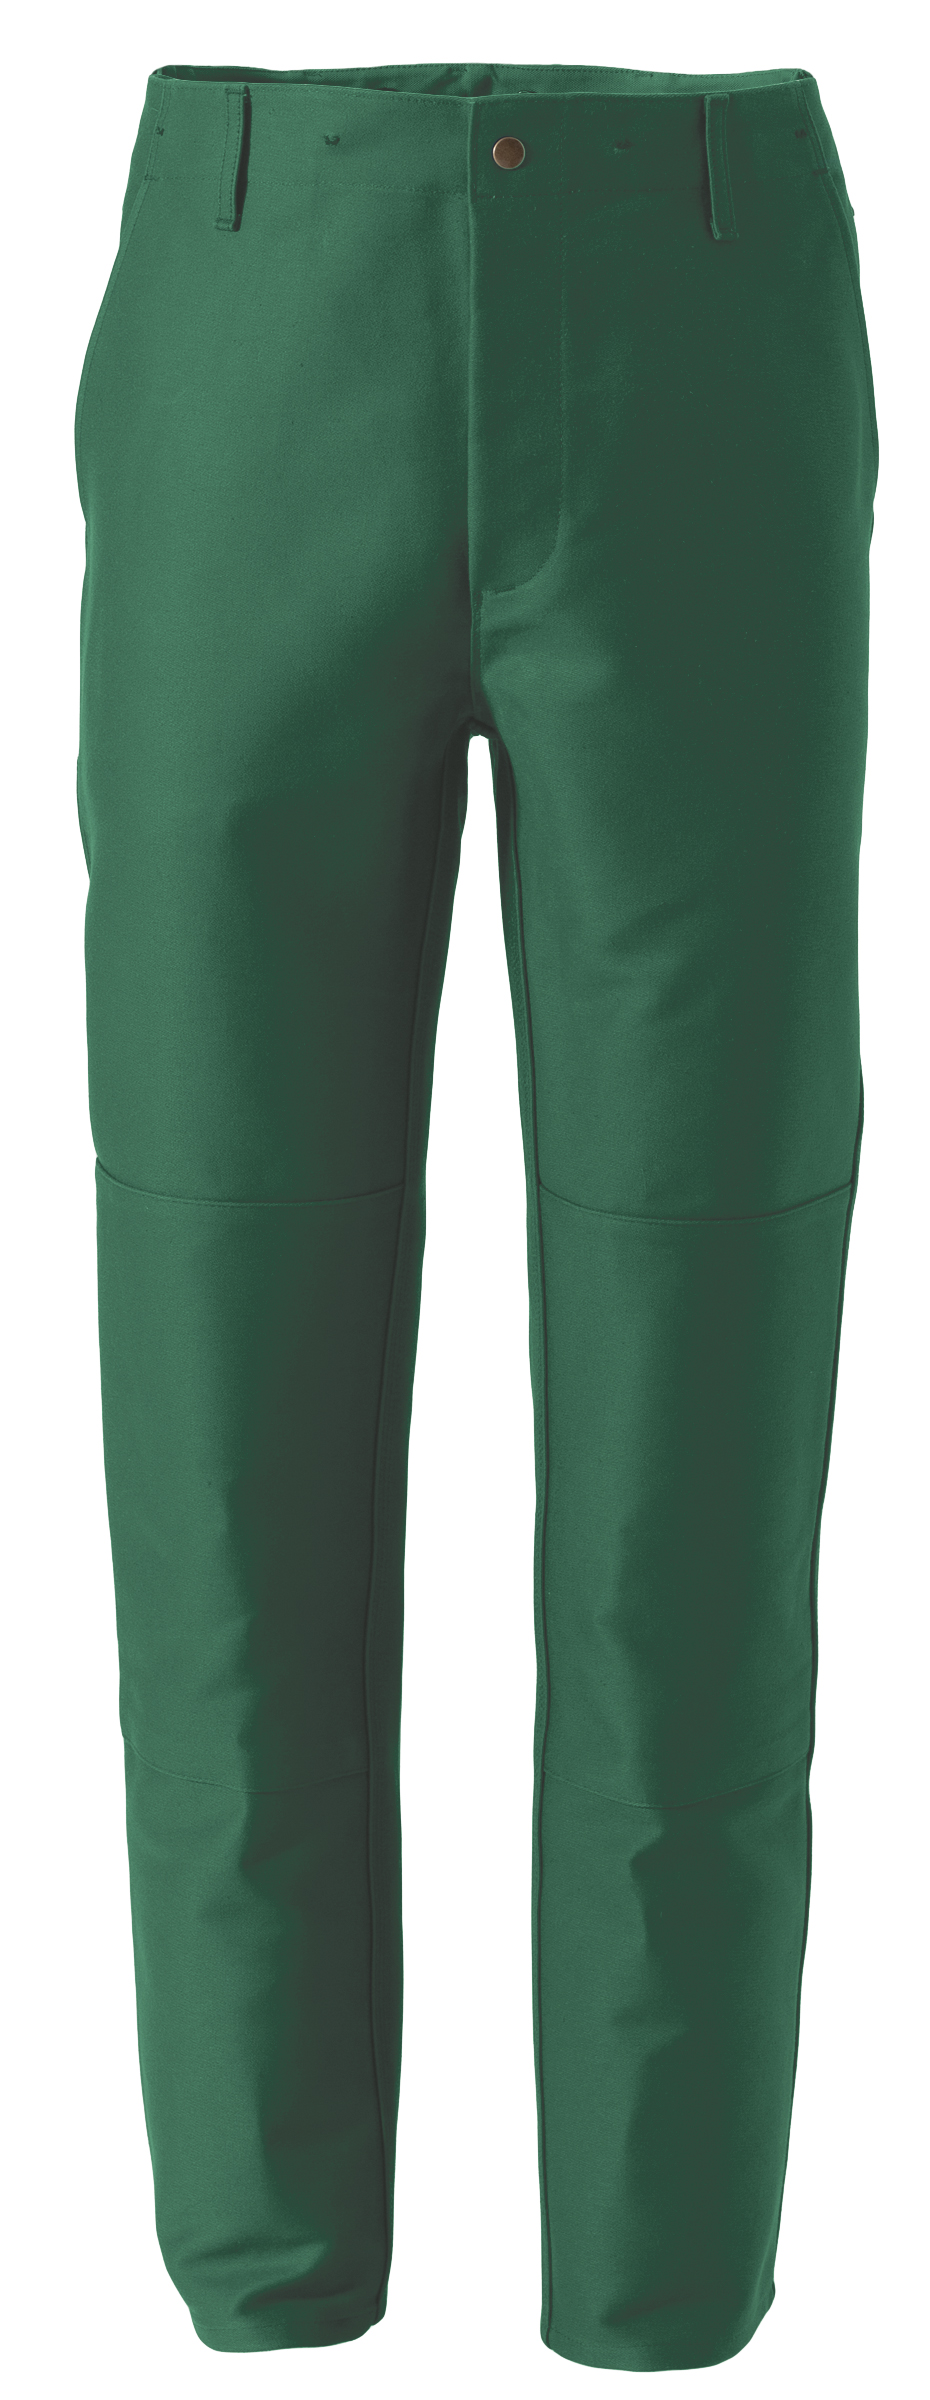 ROFA Bundhose Arbeitshose Berufshose Workerhose Arbeitskleidung Berufskleidung Pilot grün ca 525 g